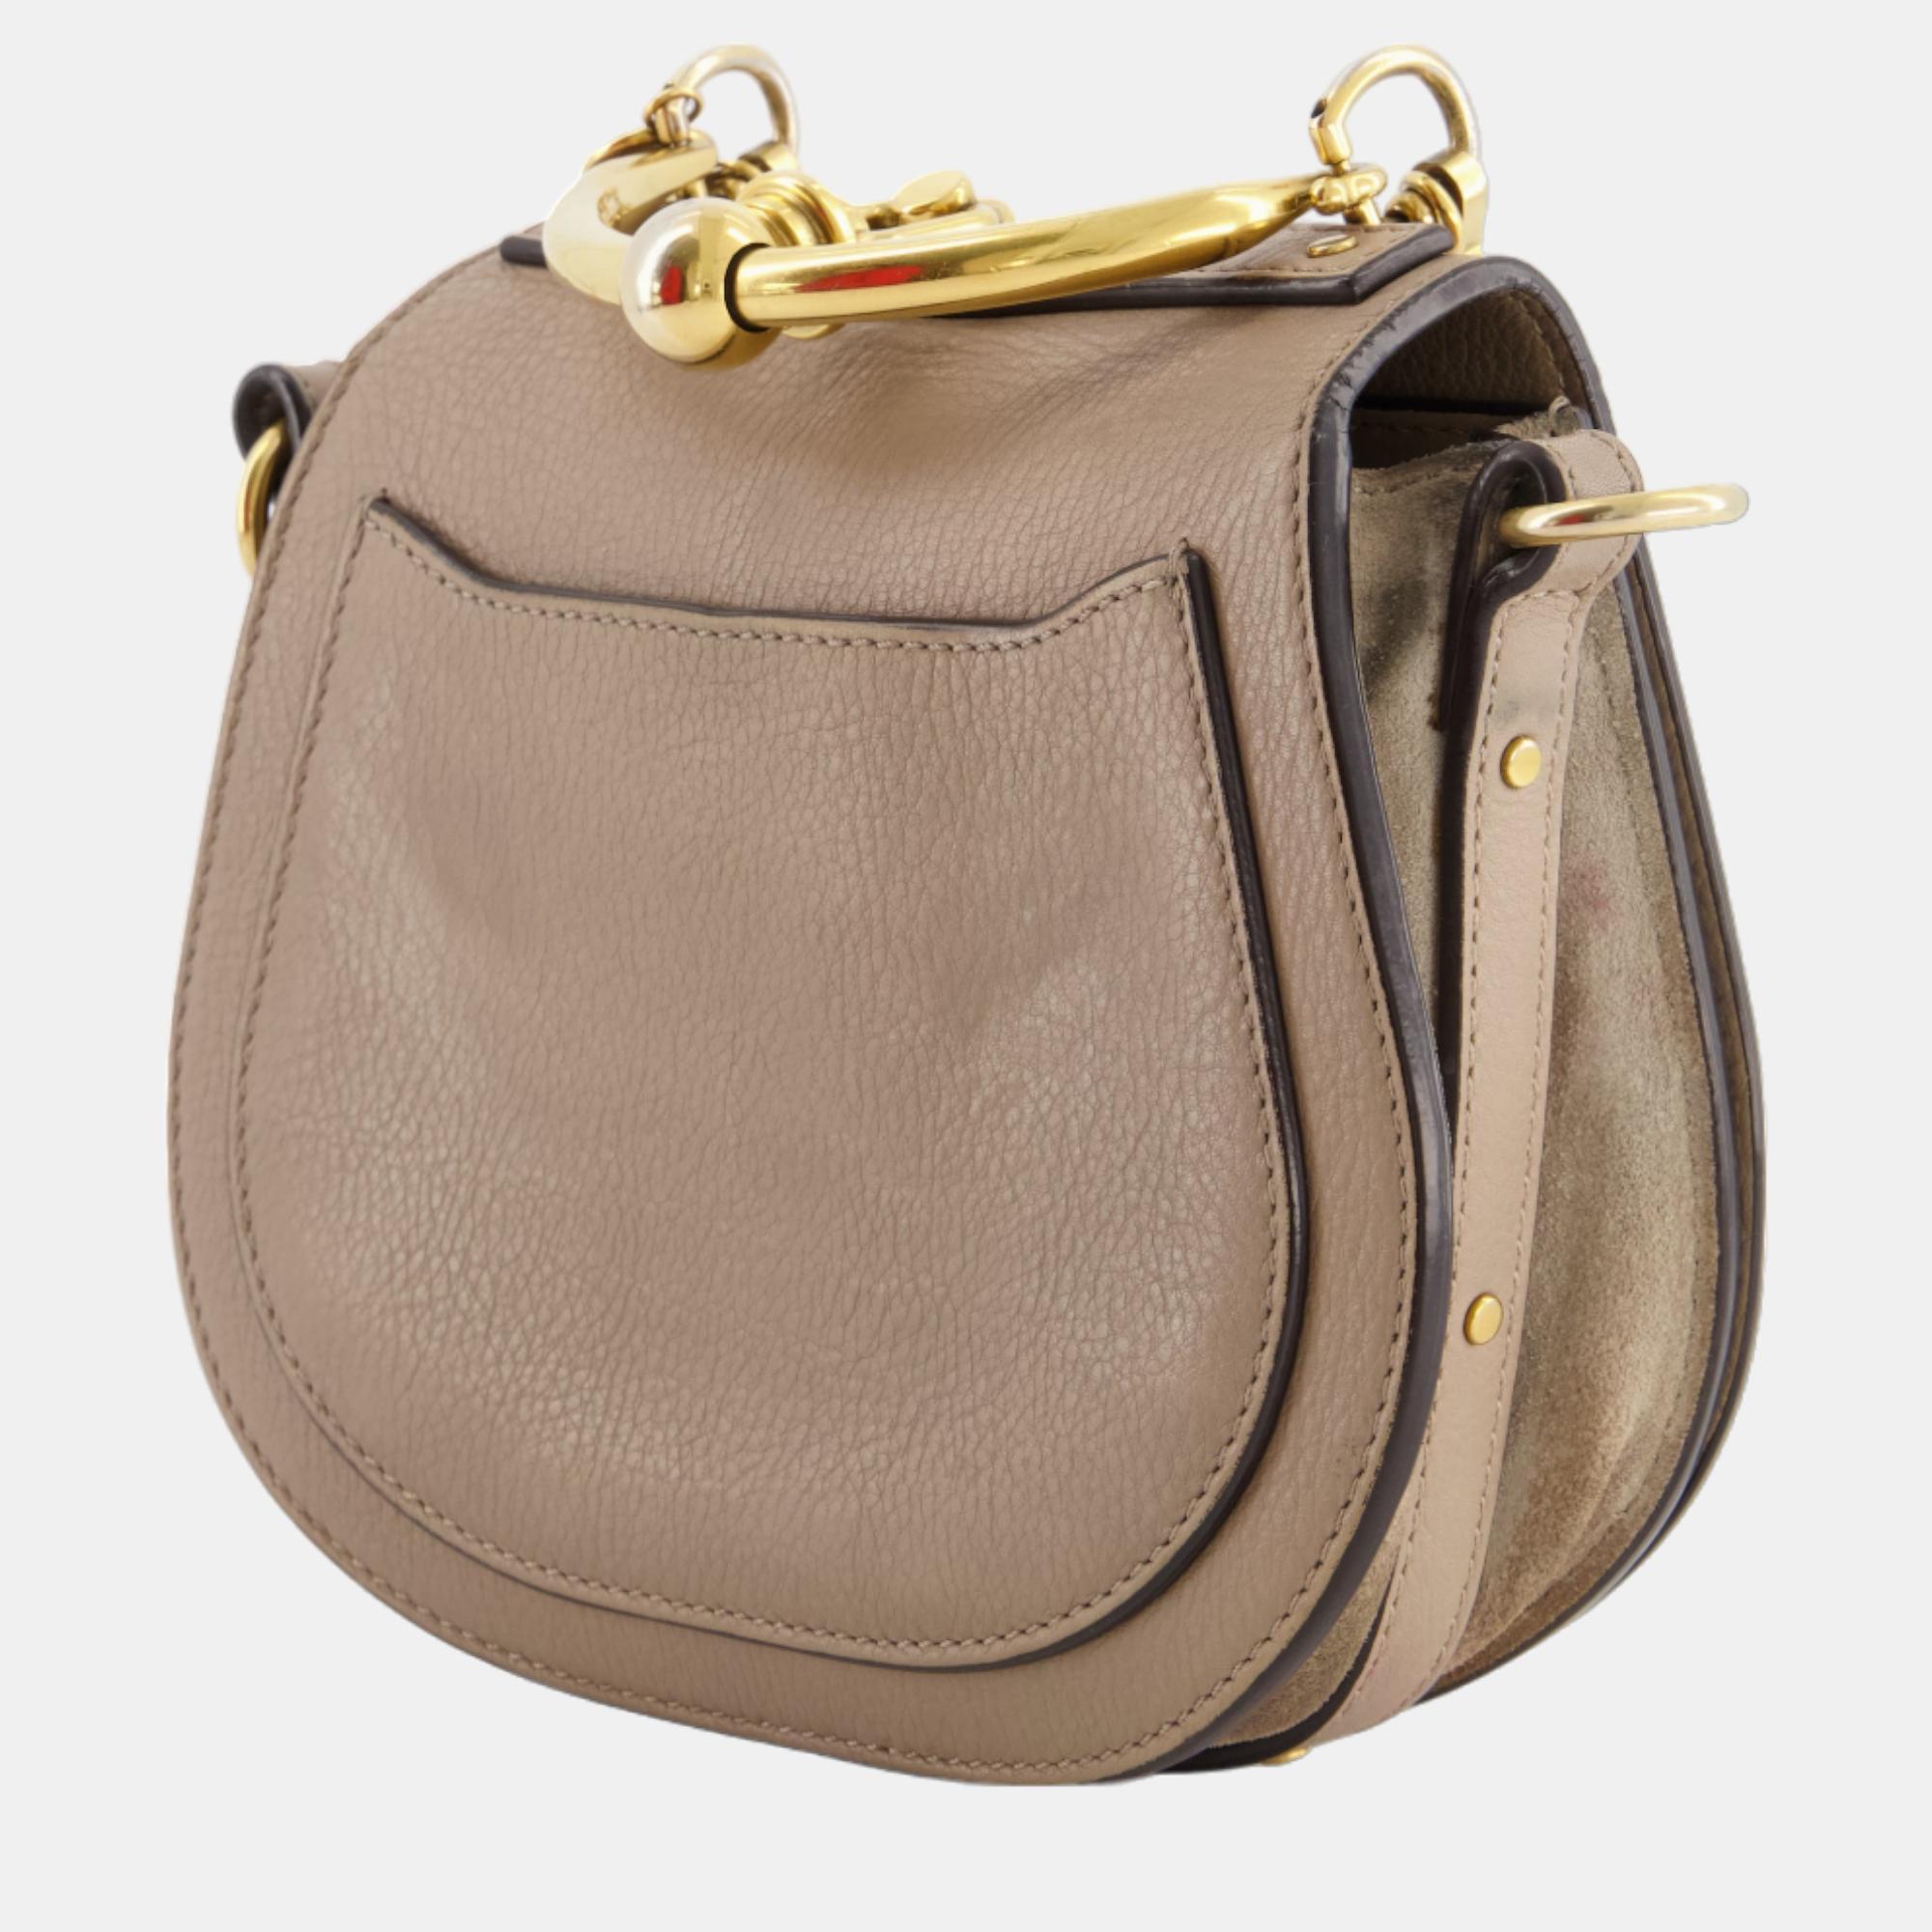 Chloe Brown Nile Leather Handbag With Gold Hardware